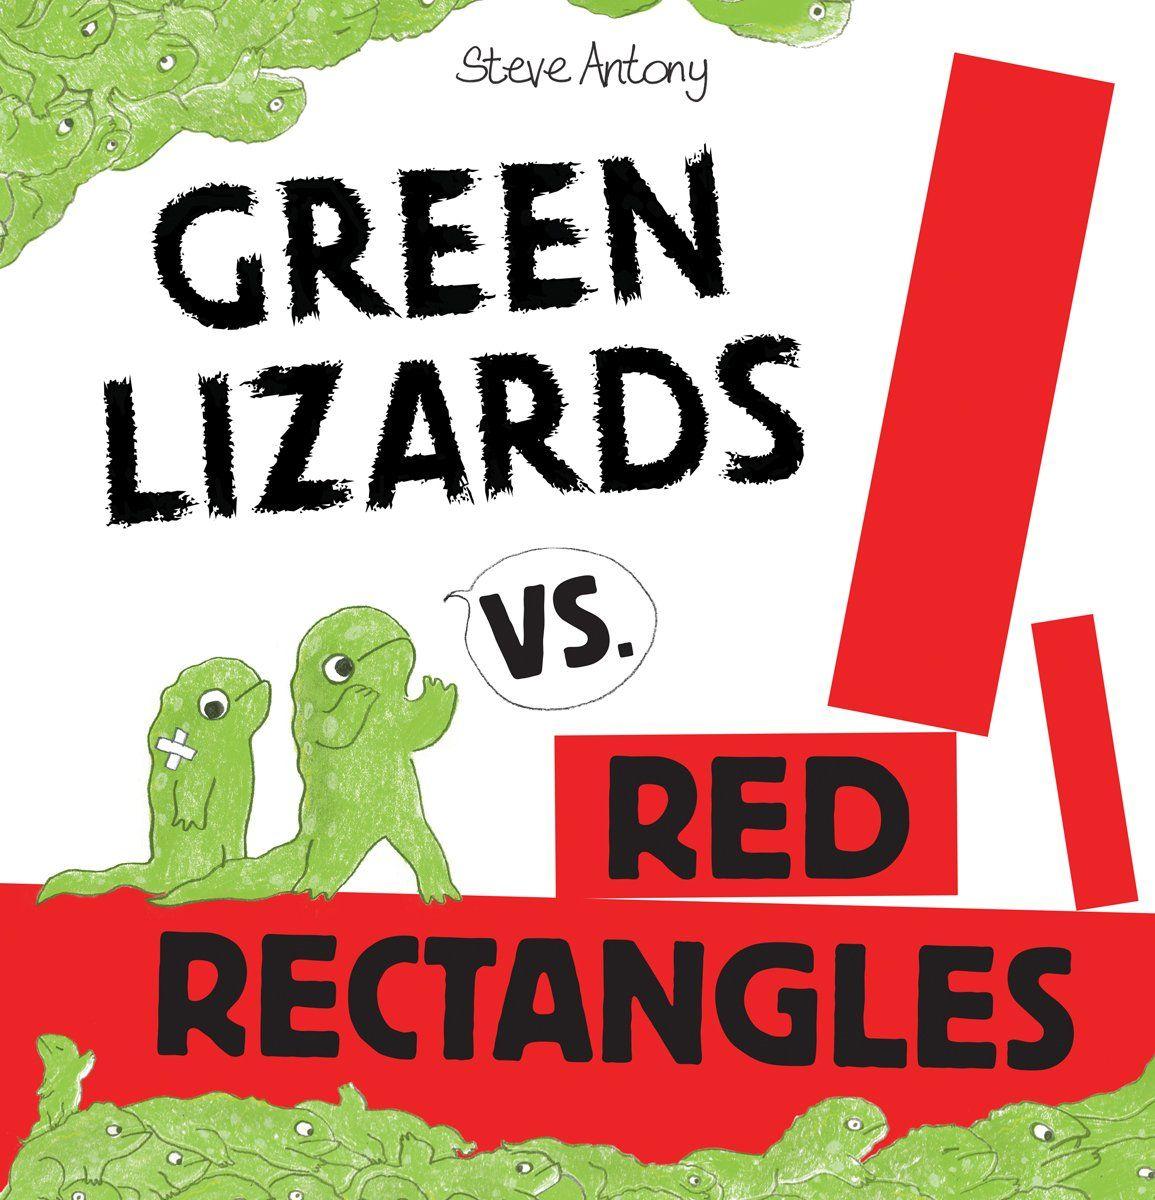 Black and Red Rectangles Logo - Green Lizards vs. Red Rectangles: Amazon.co.uk: Steve Antony